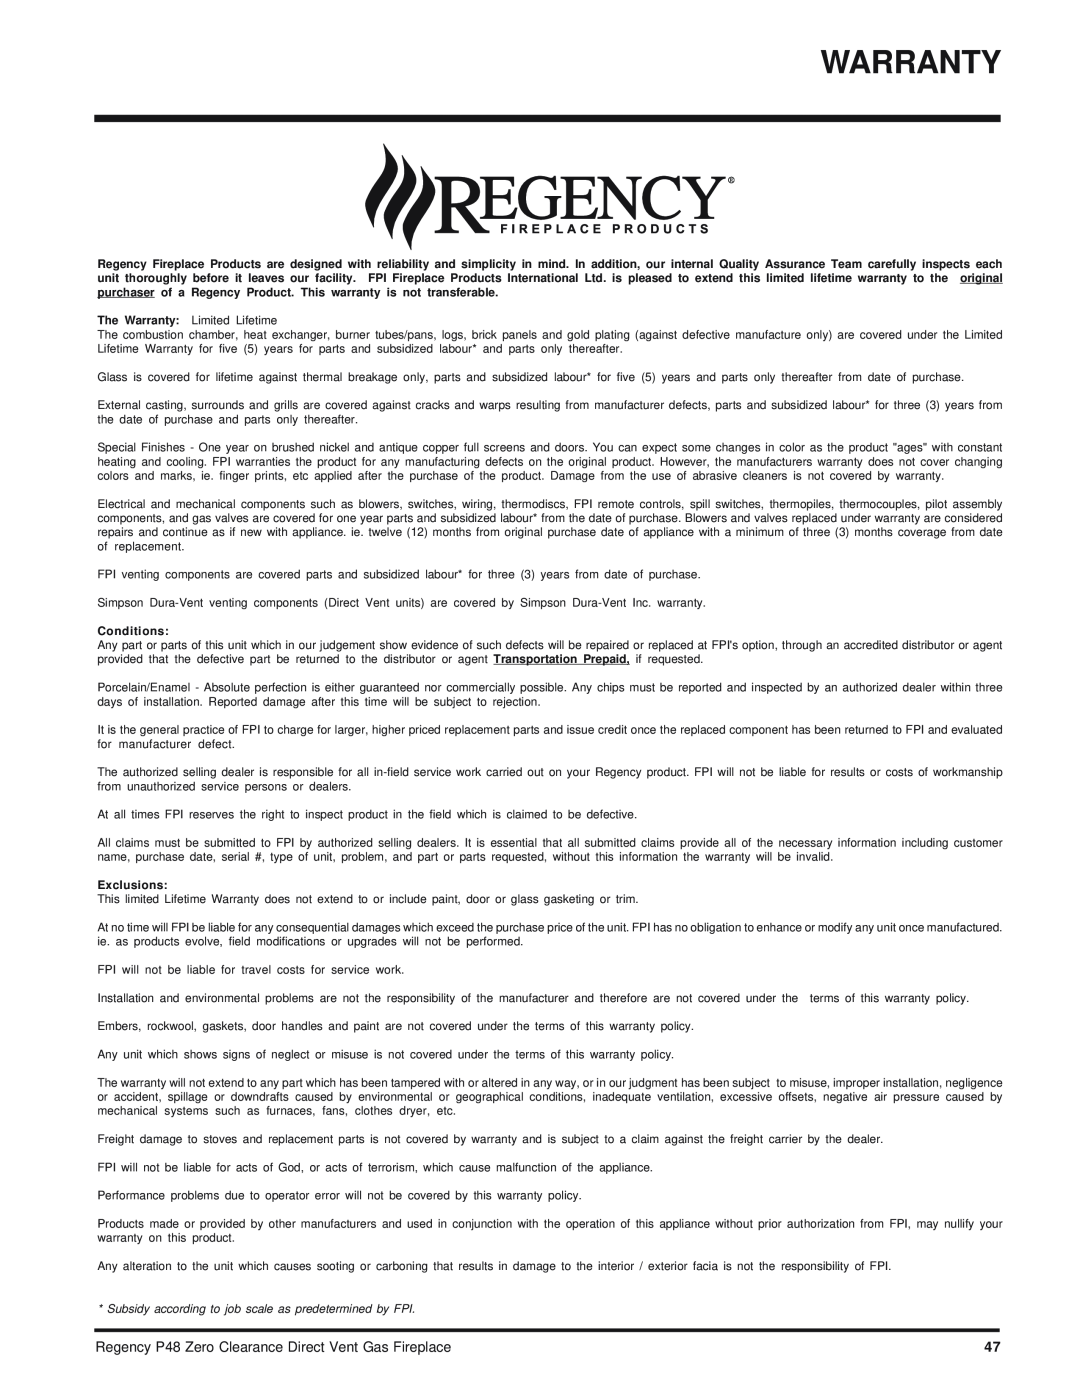 Regency P48-LP, P48-NG installation manual Warranty, Conditions, Exclusions 